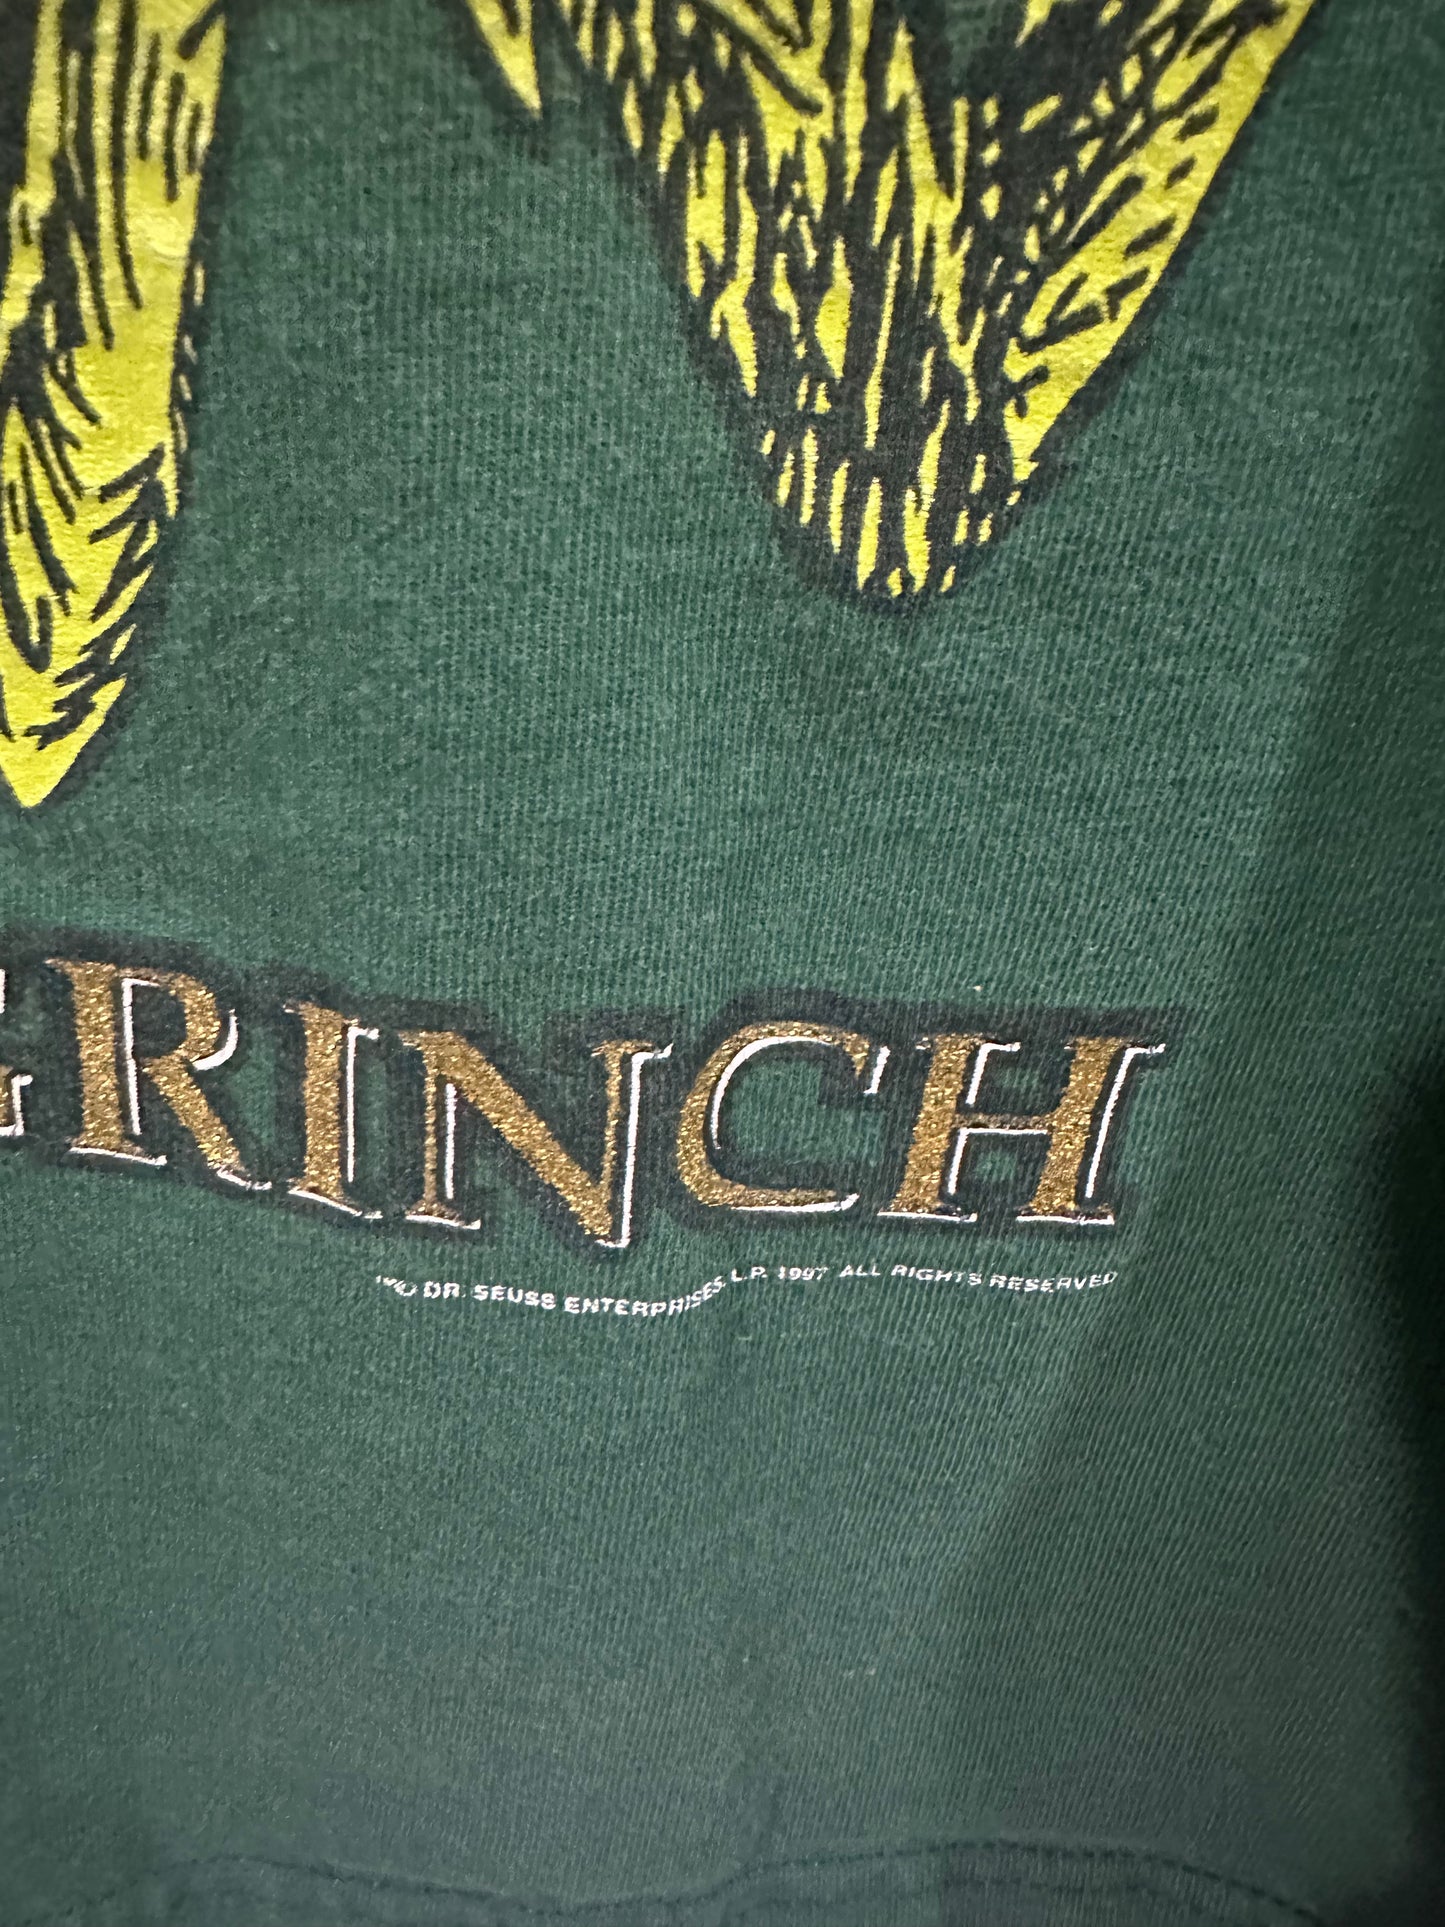 Vintage 1997 Grinch t shirt